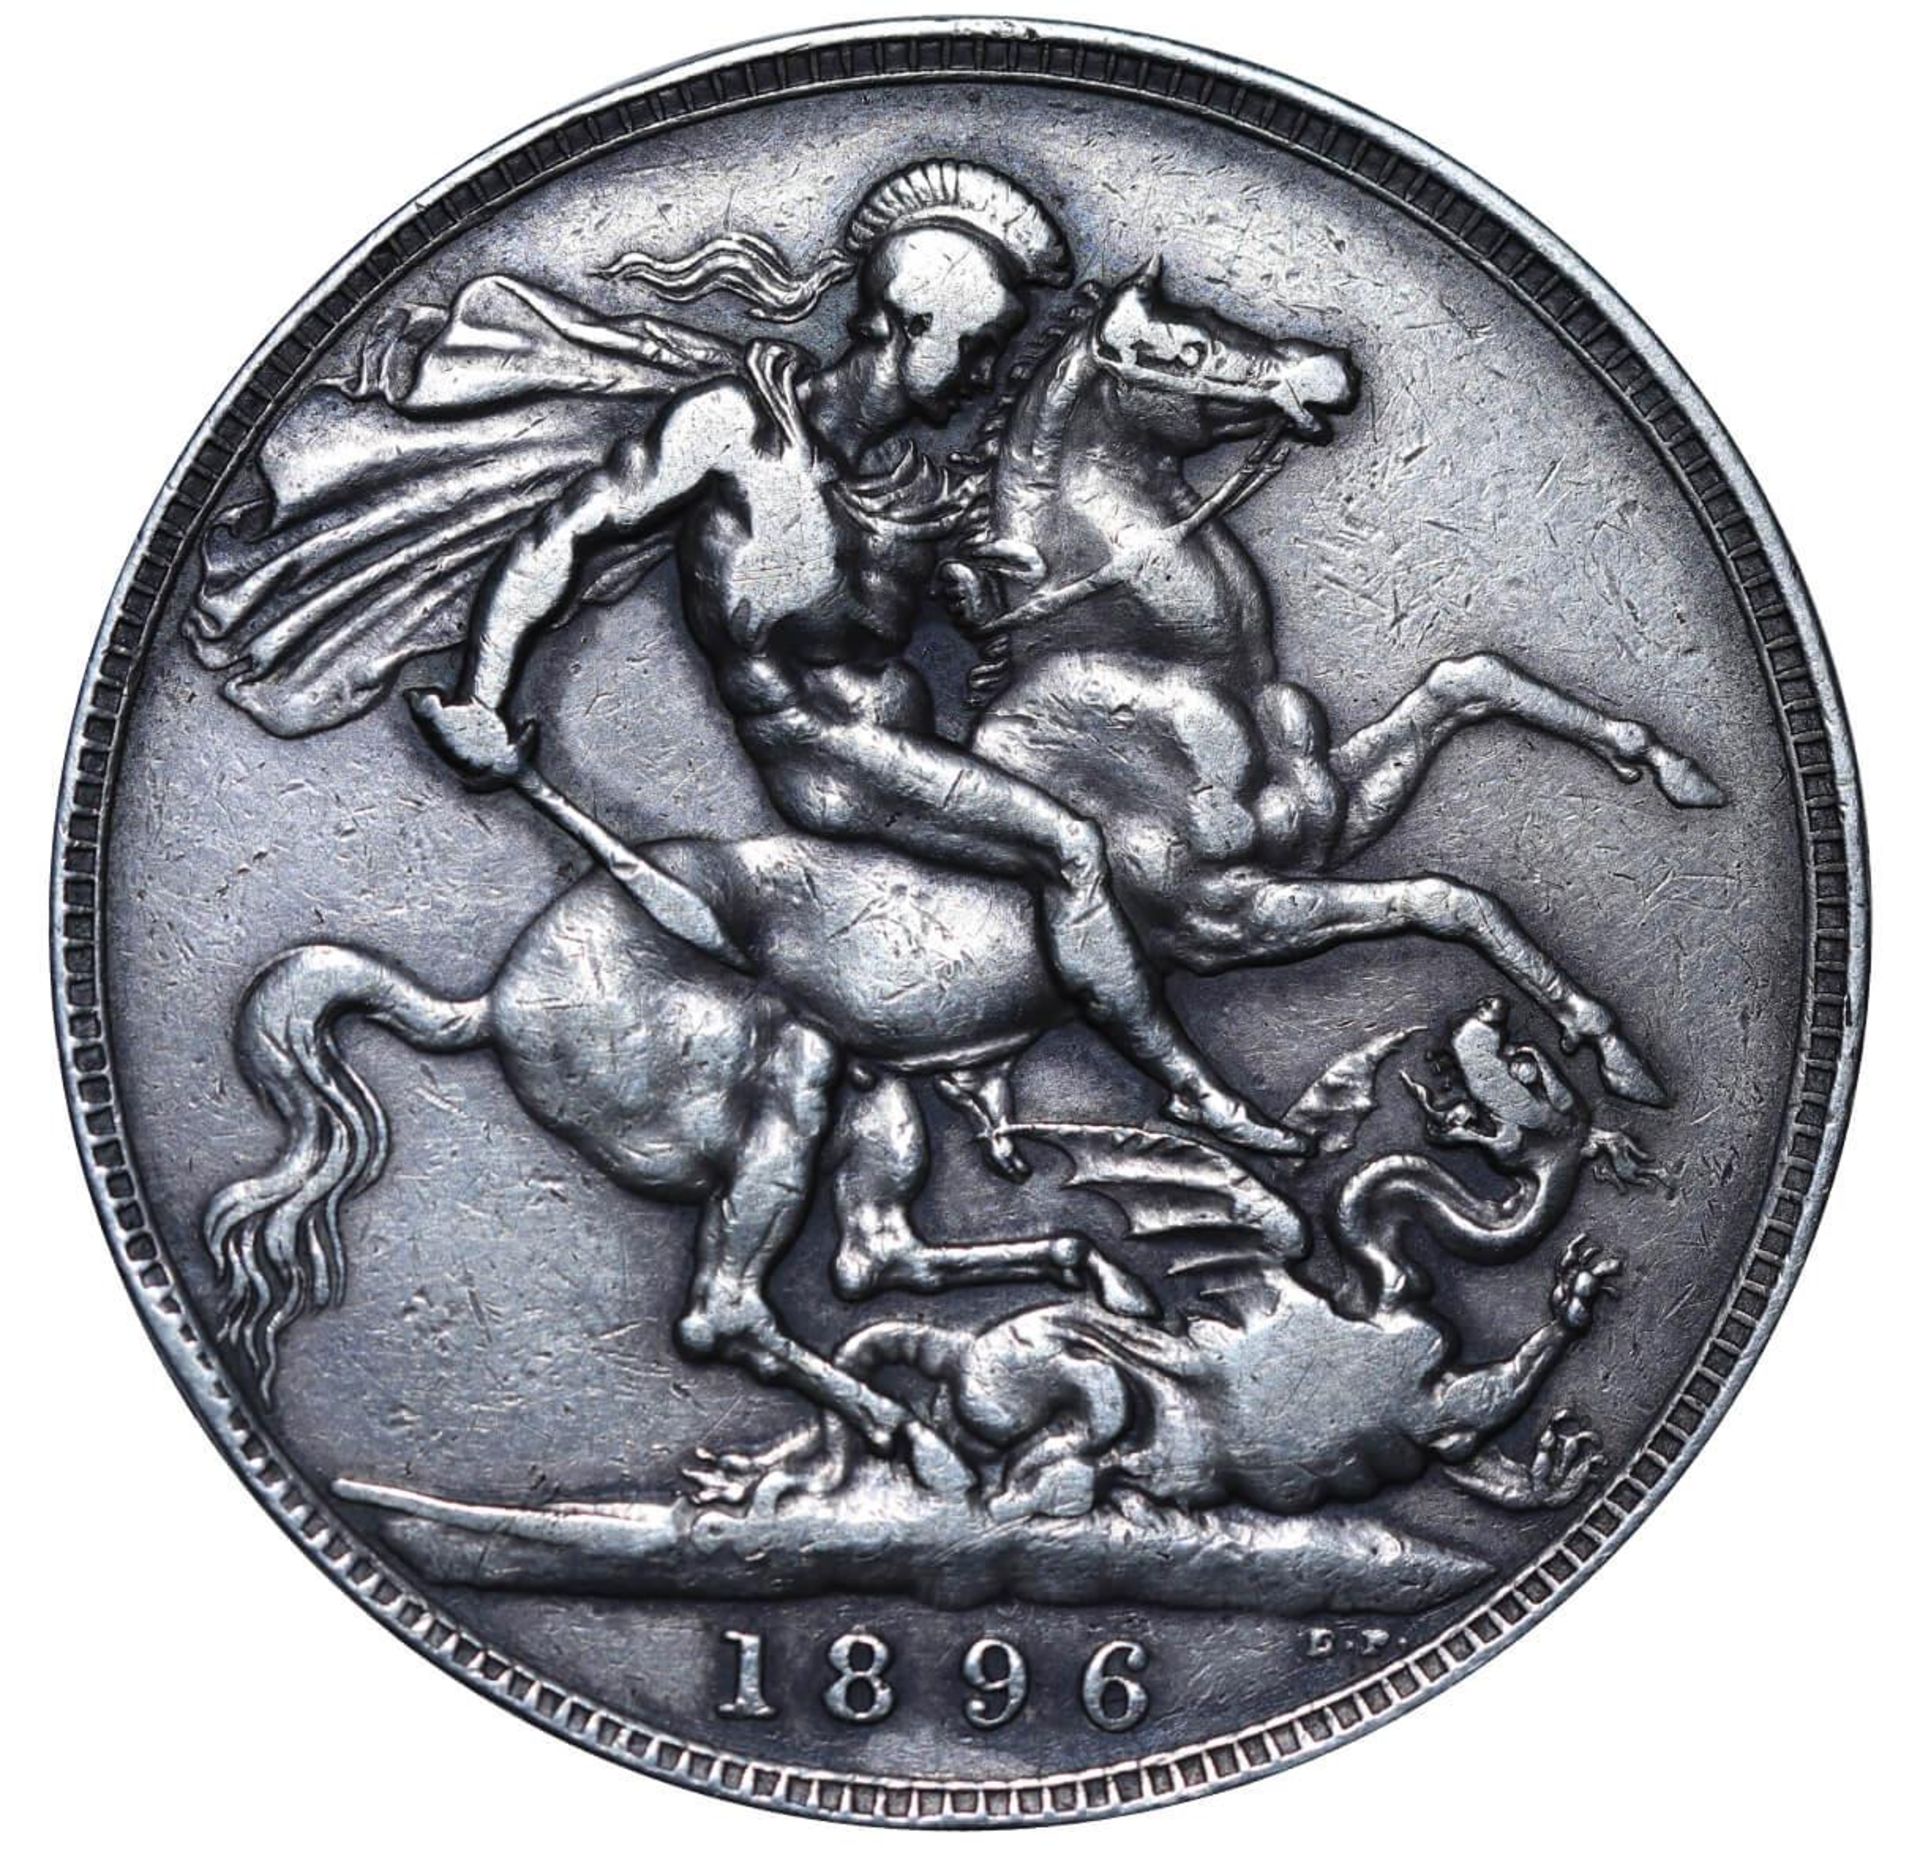 United Kingdom, 1 Crown, 1896 year - Image 3 of 3